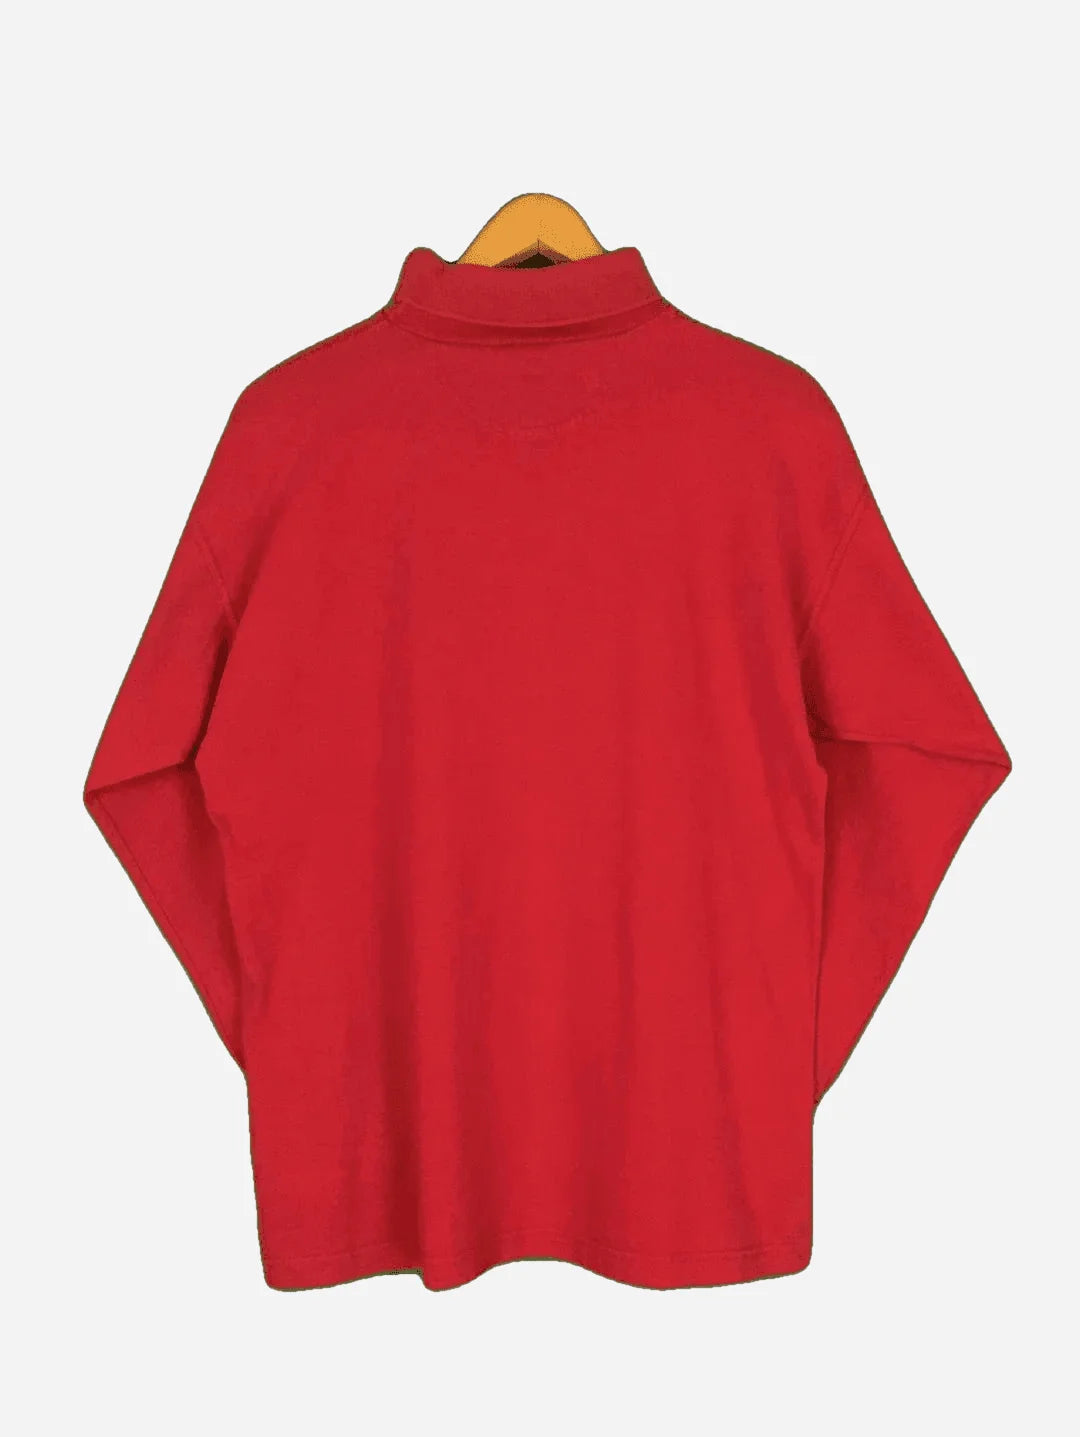 Adidas turtleneck sweater (S)